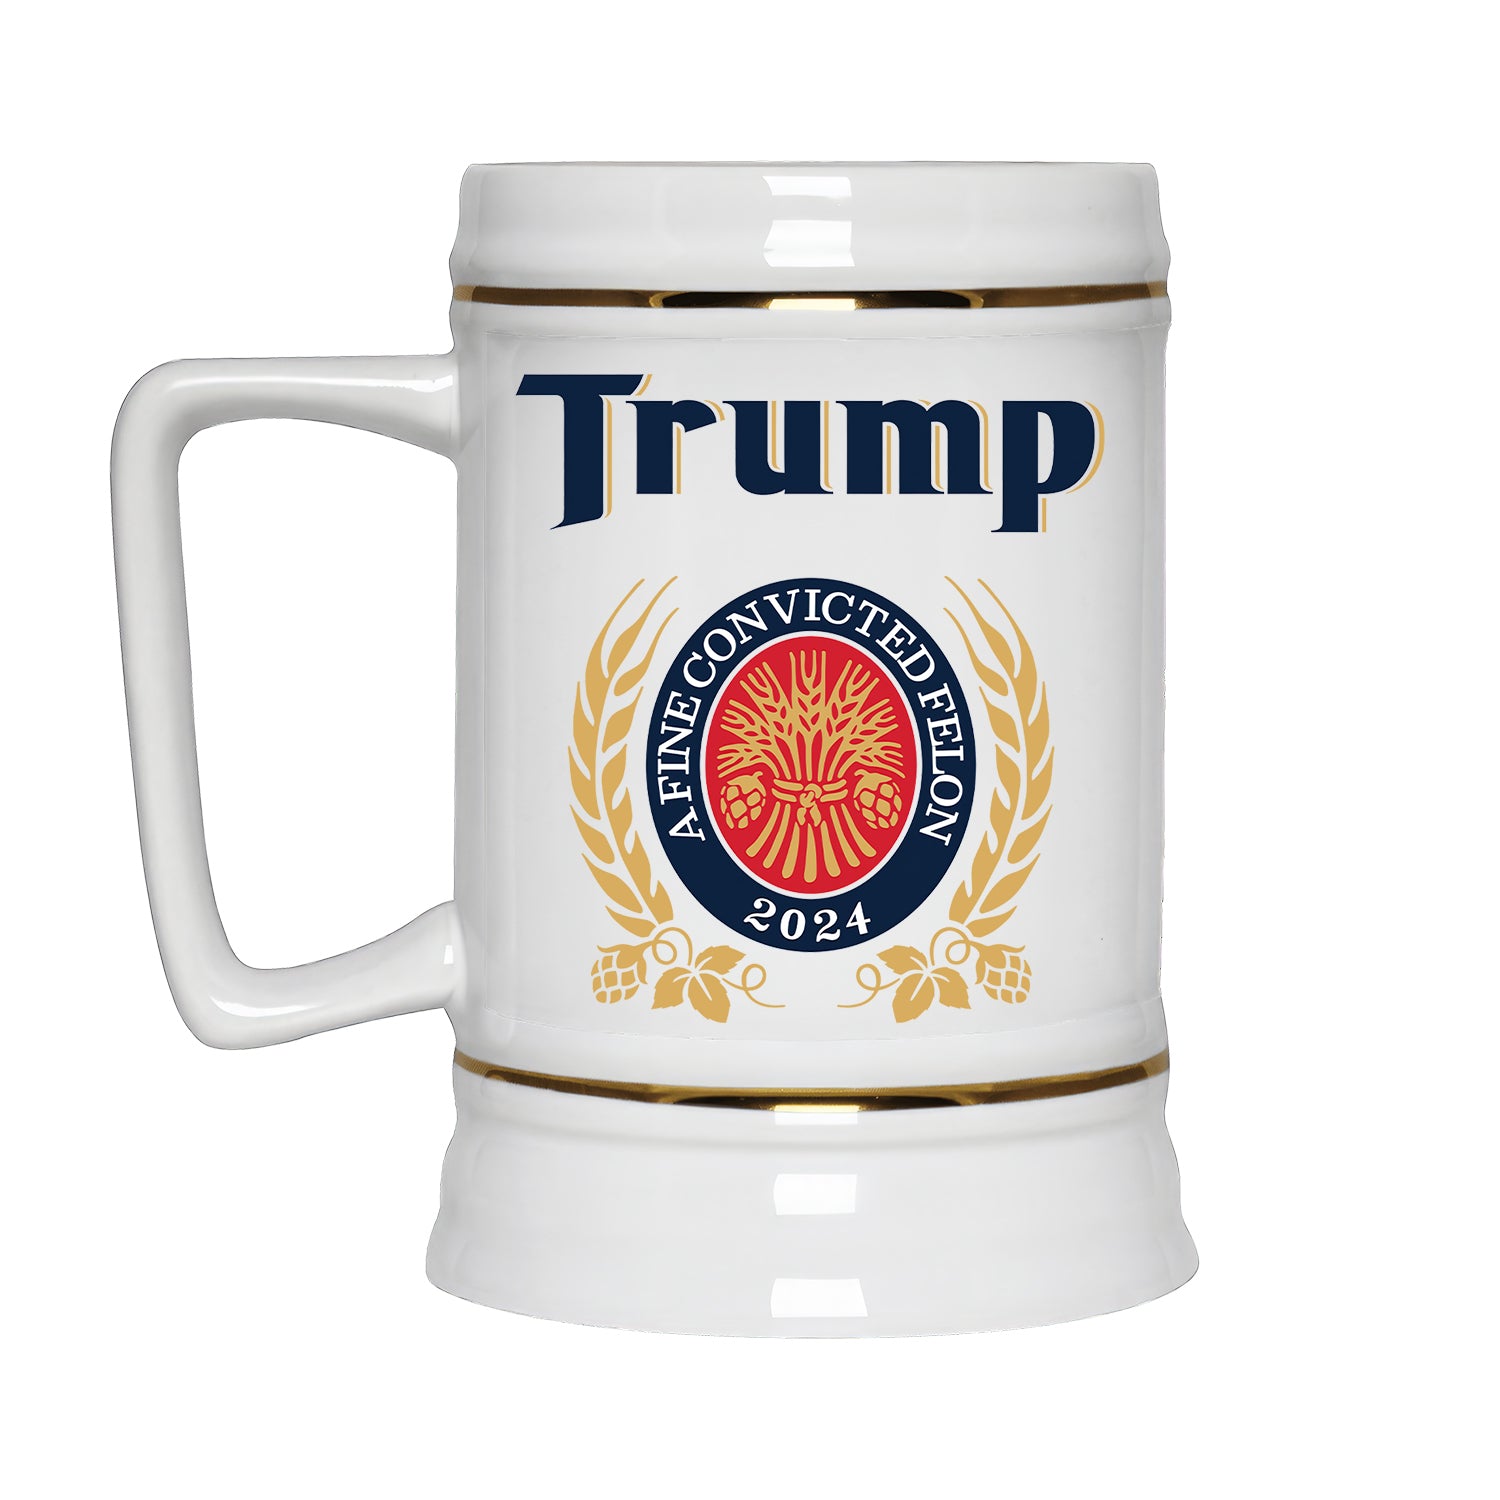 Trump A Fine Convicted Felon Beer Stein 22oz -GB-BS01